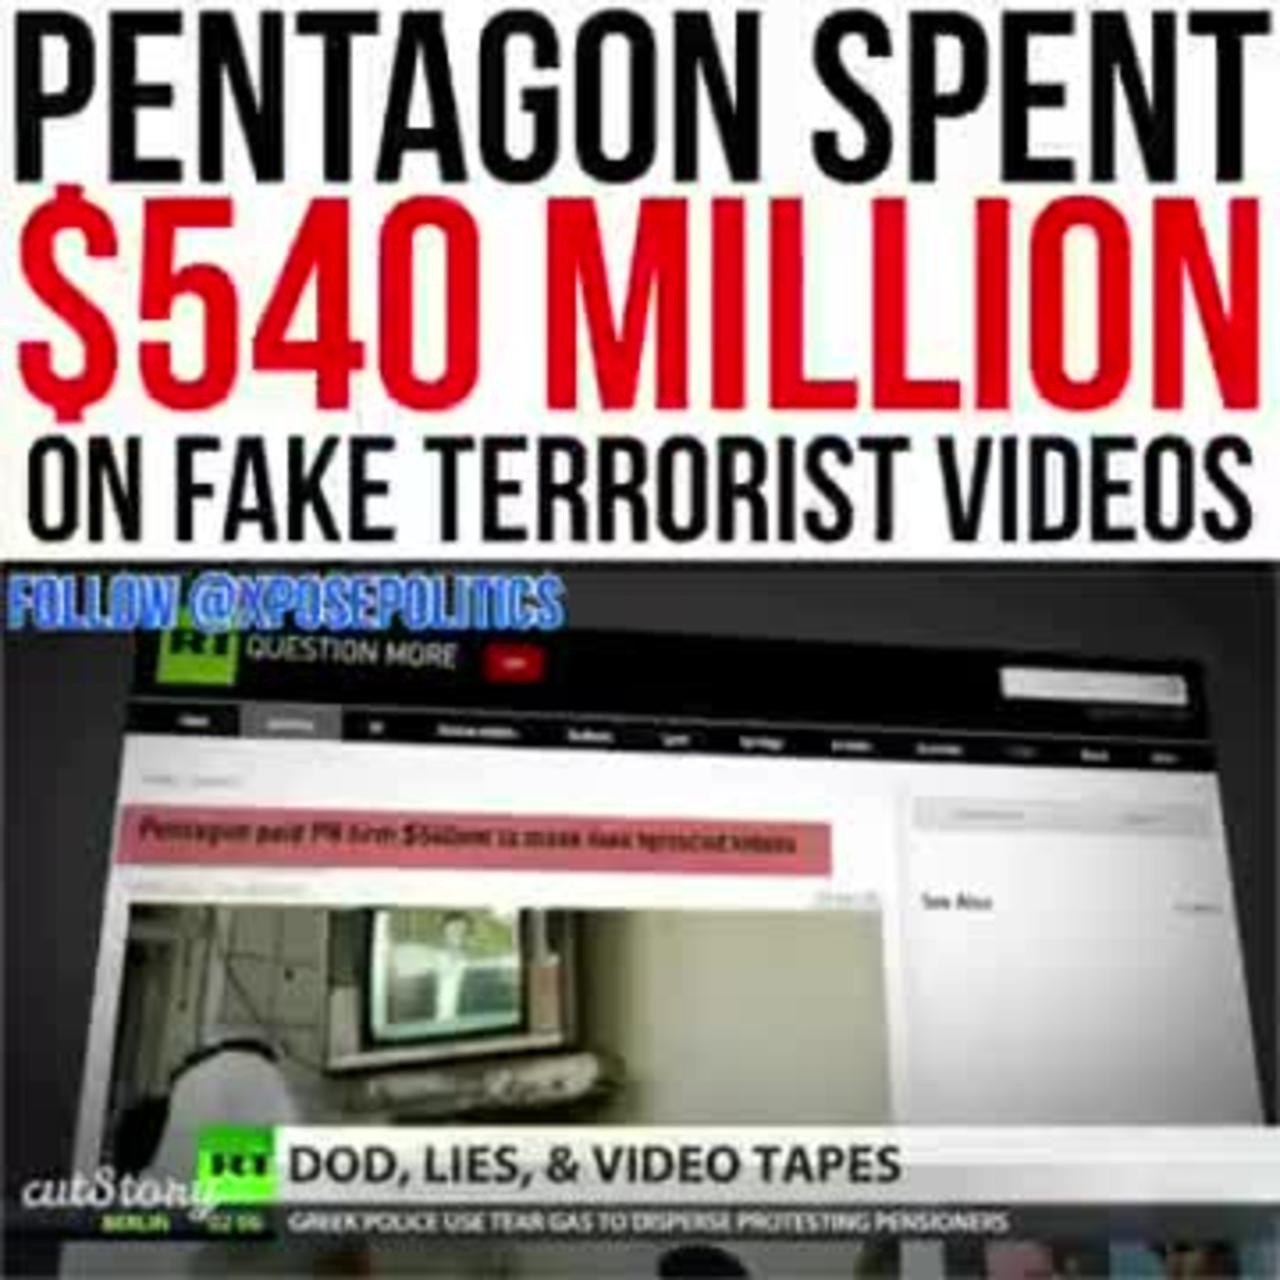 The PENTAGON “FAKE” TERRORIST VIDEOS